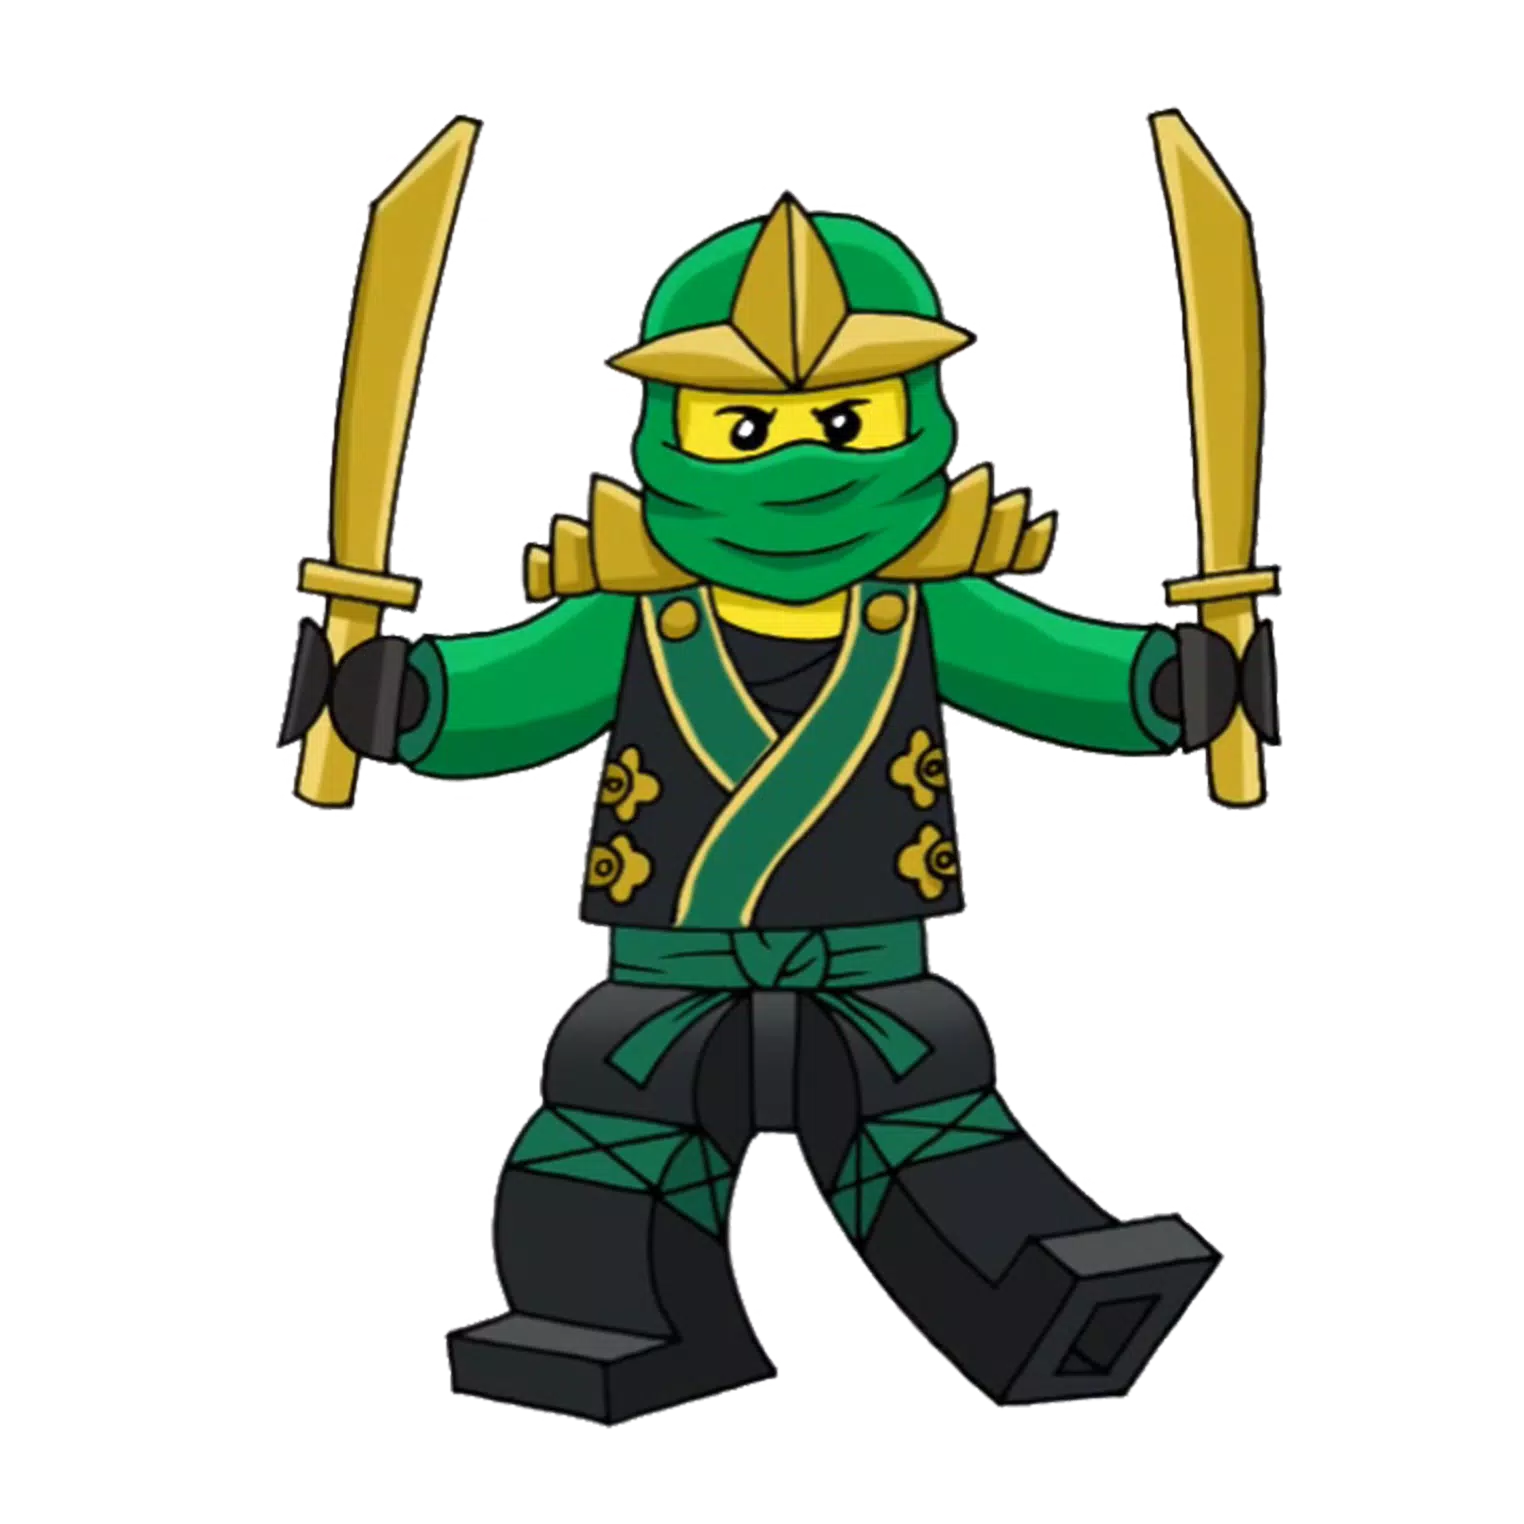 Descarga de APK de How to draw Lego Ninjago characters para Android